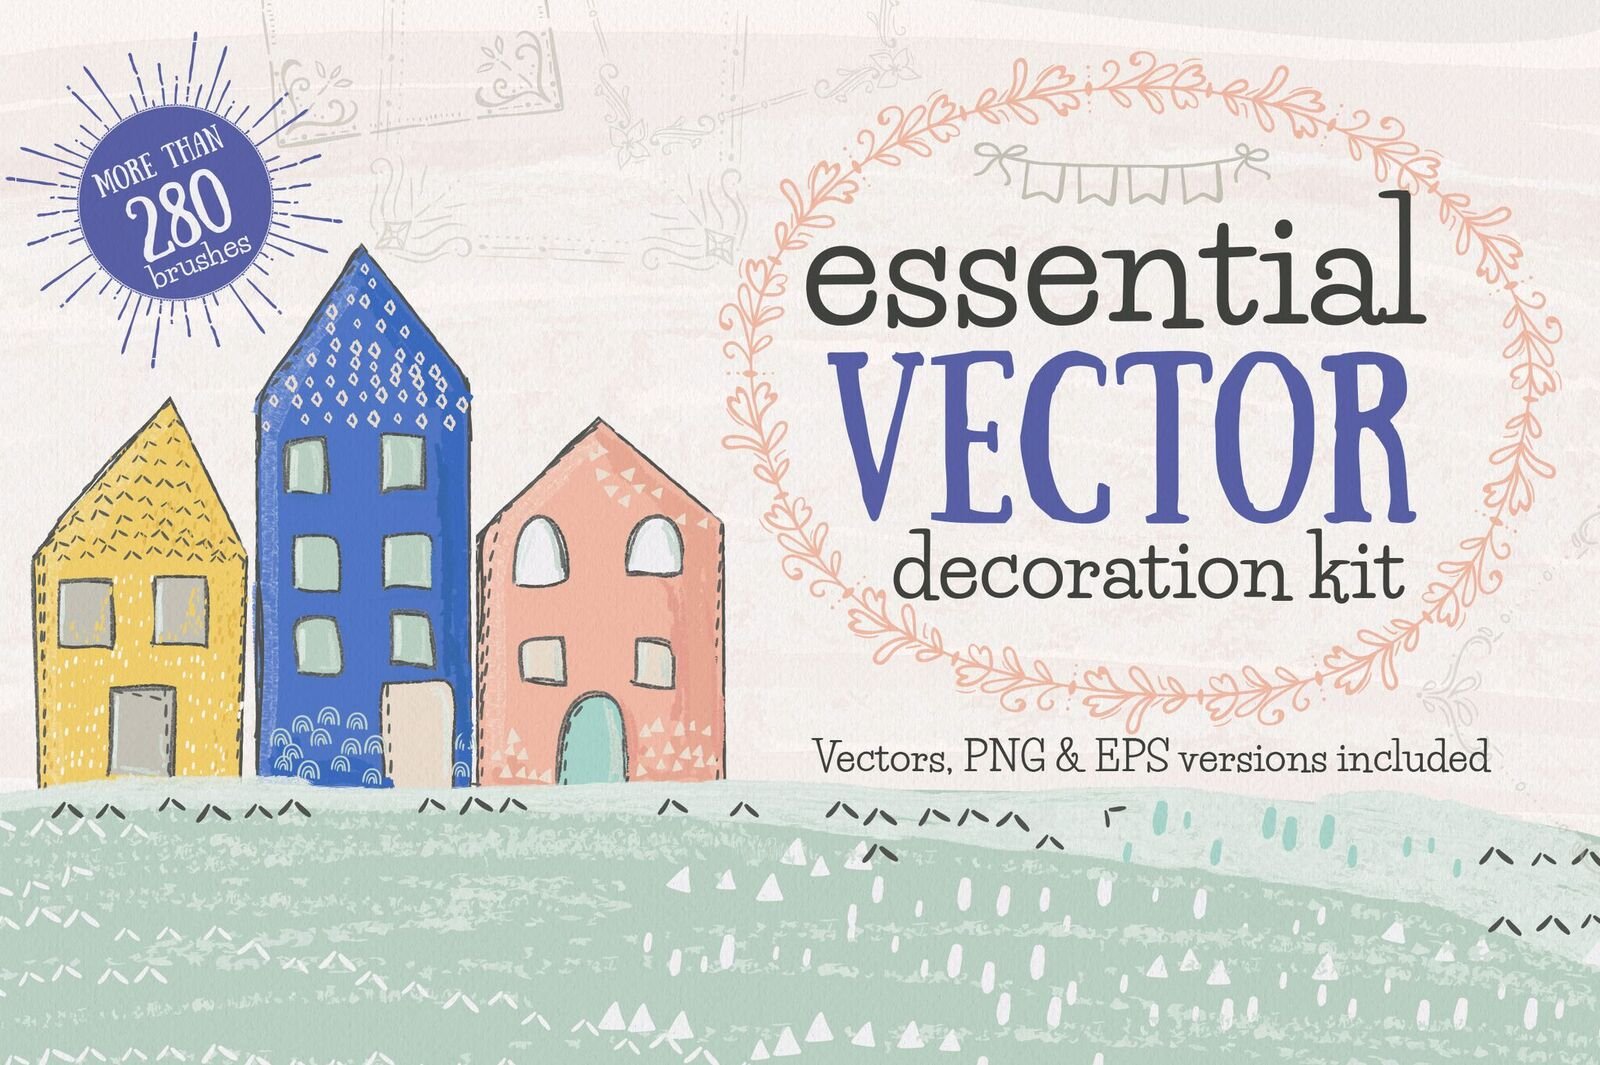 essential-vector-decoration-kit